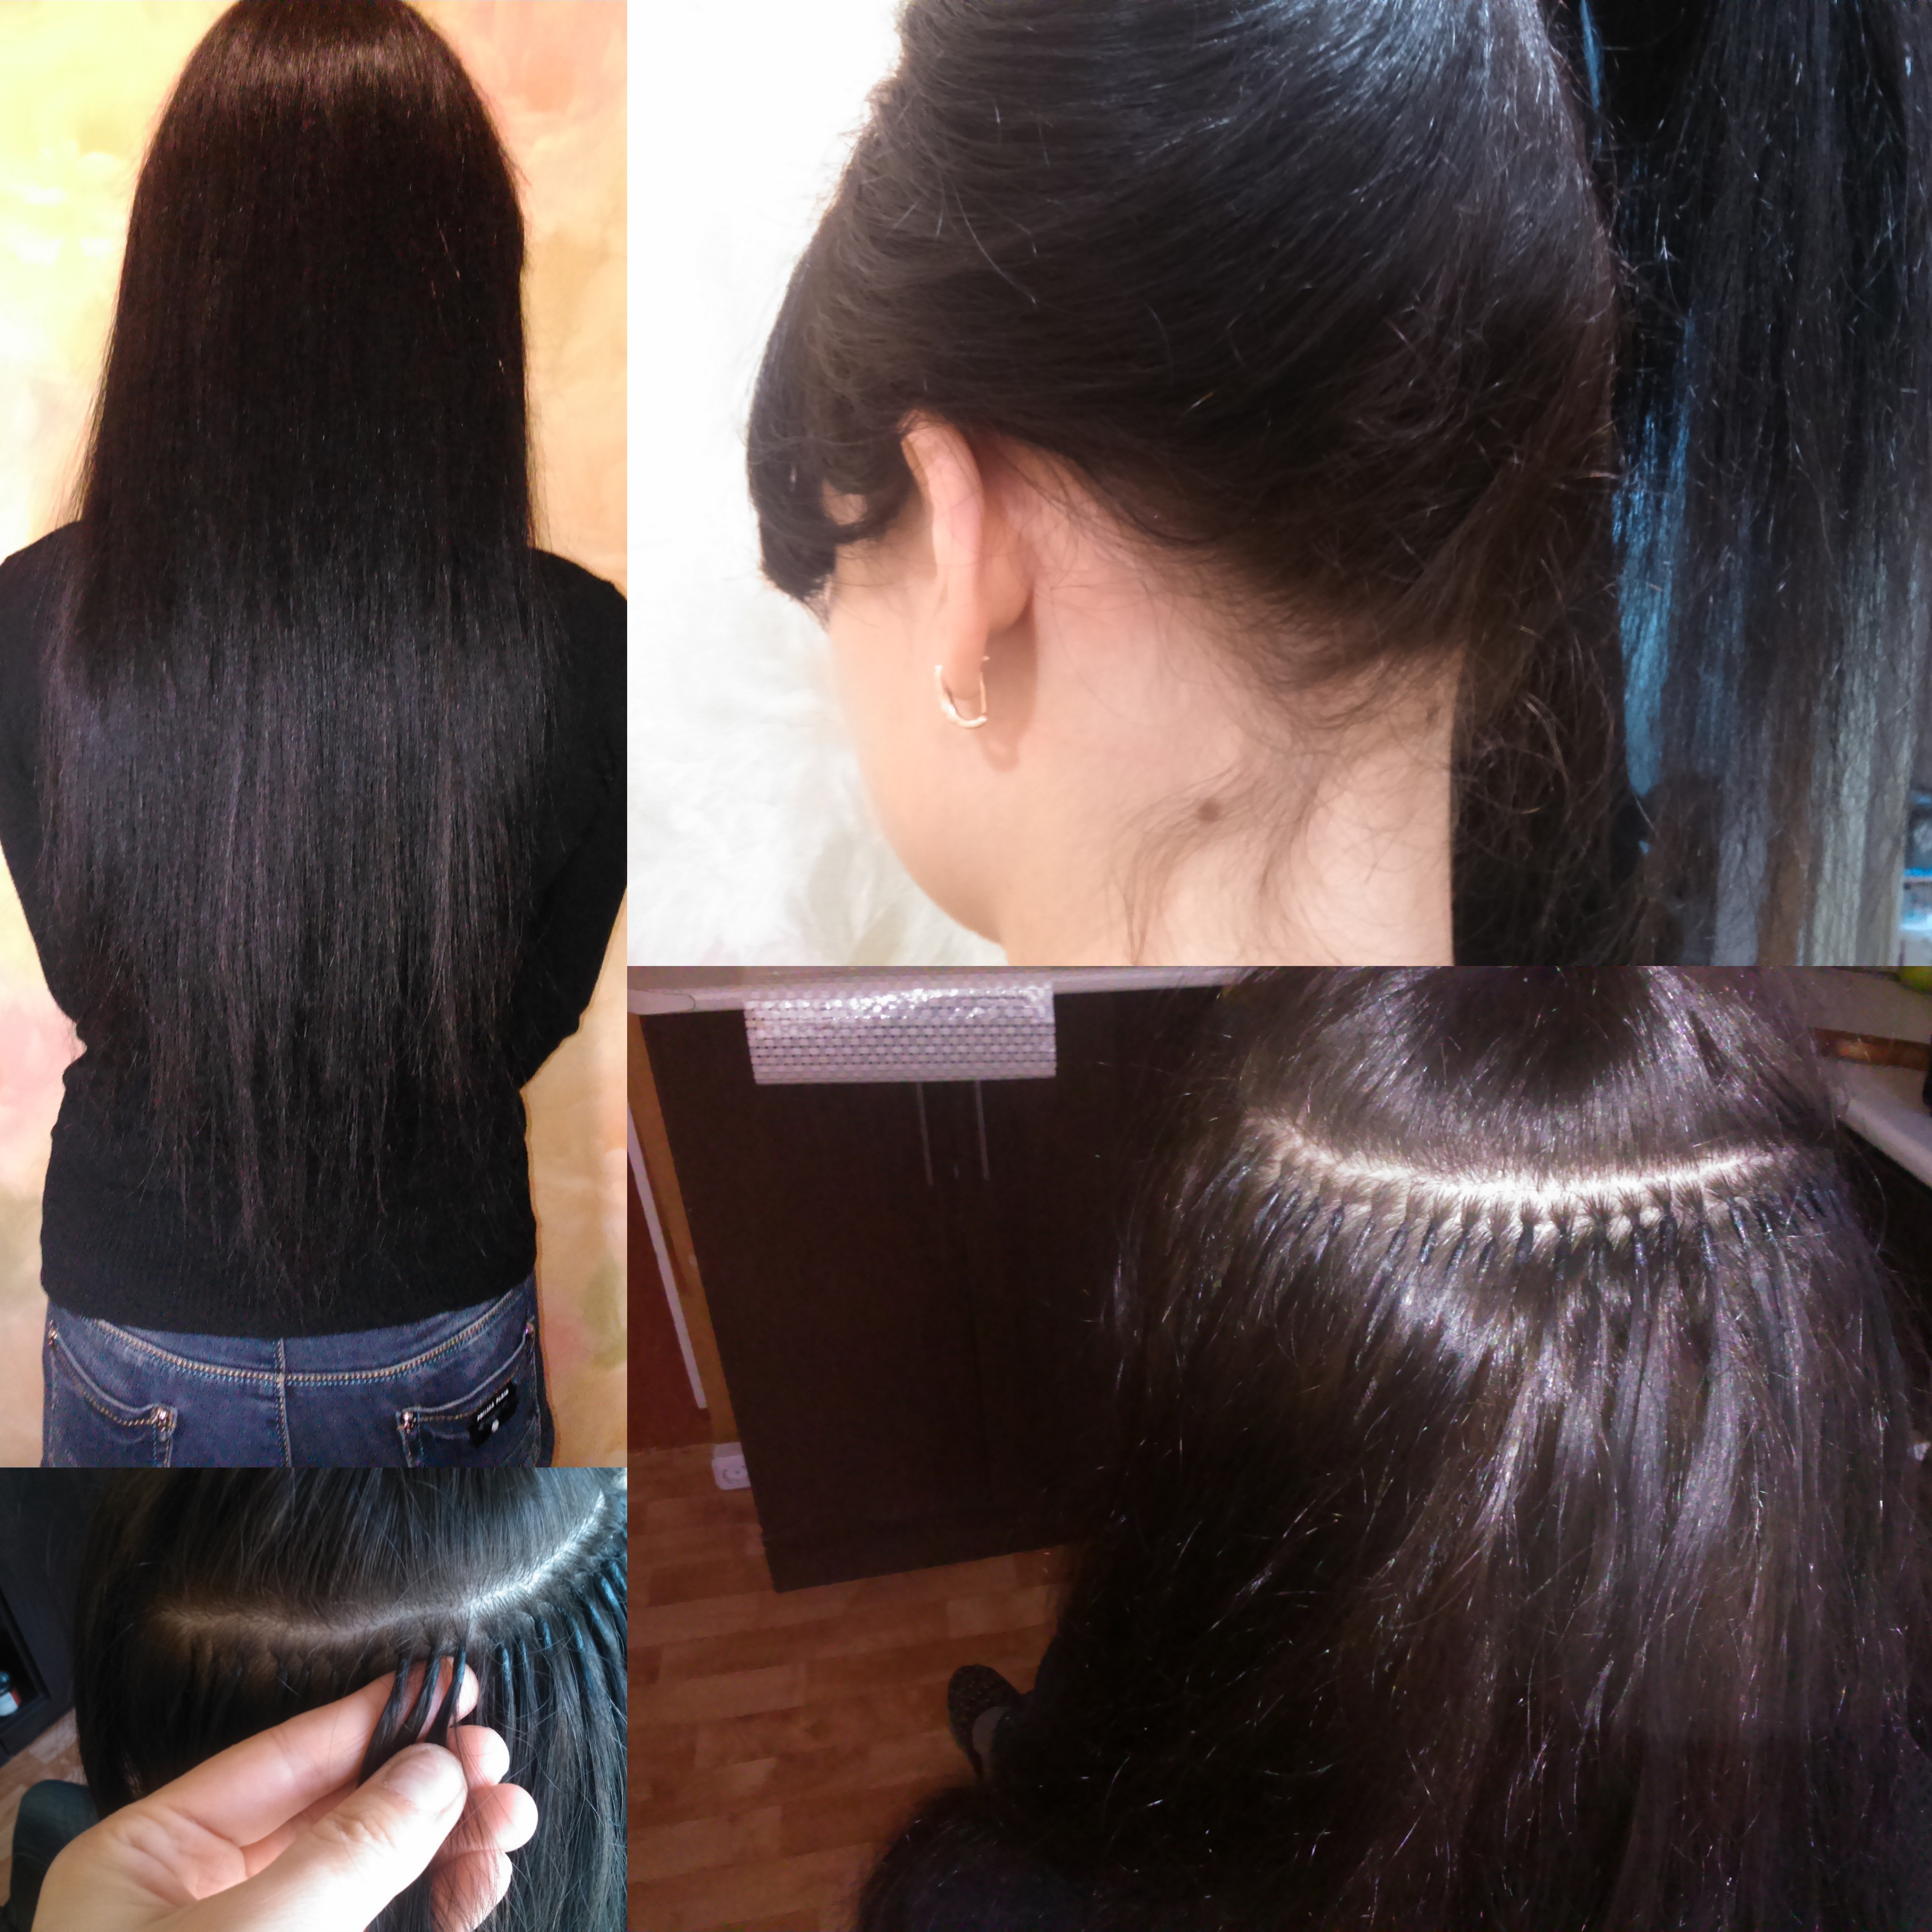 Микронаращивание волос до и после фото